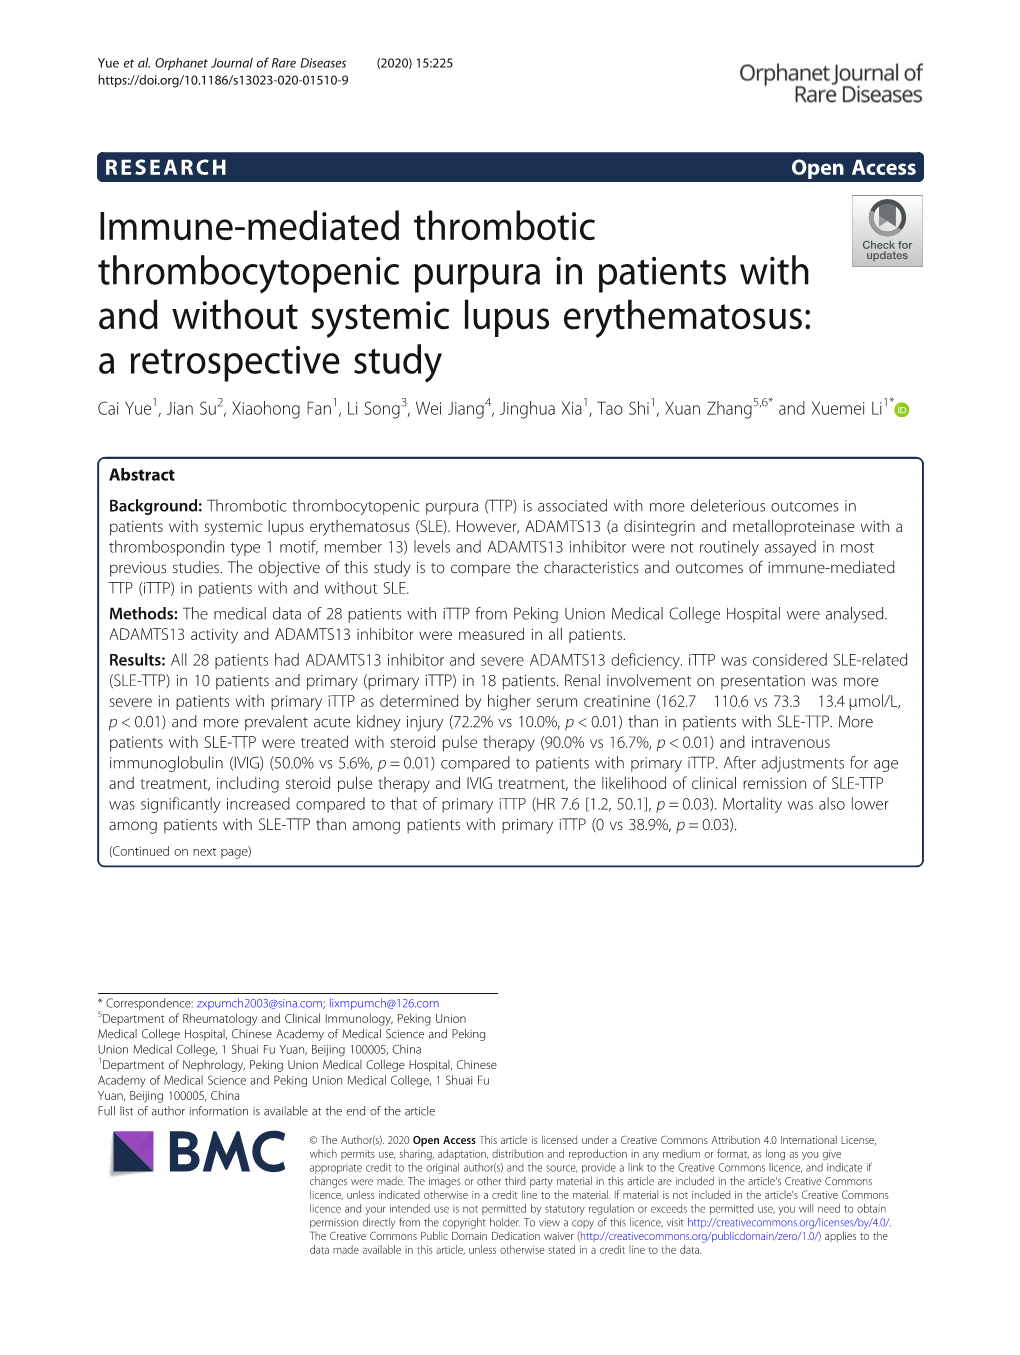 Immune-Mediated Thrombotic Thrombocytopenic Purpura In